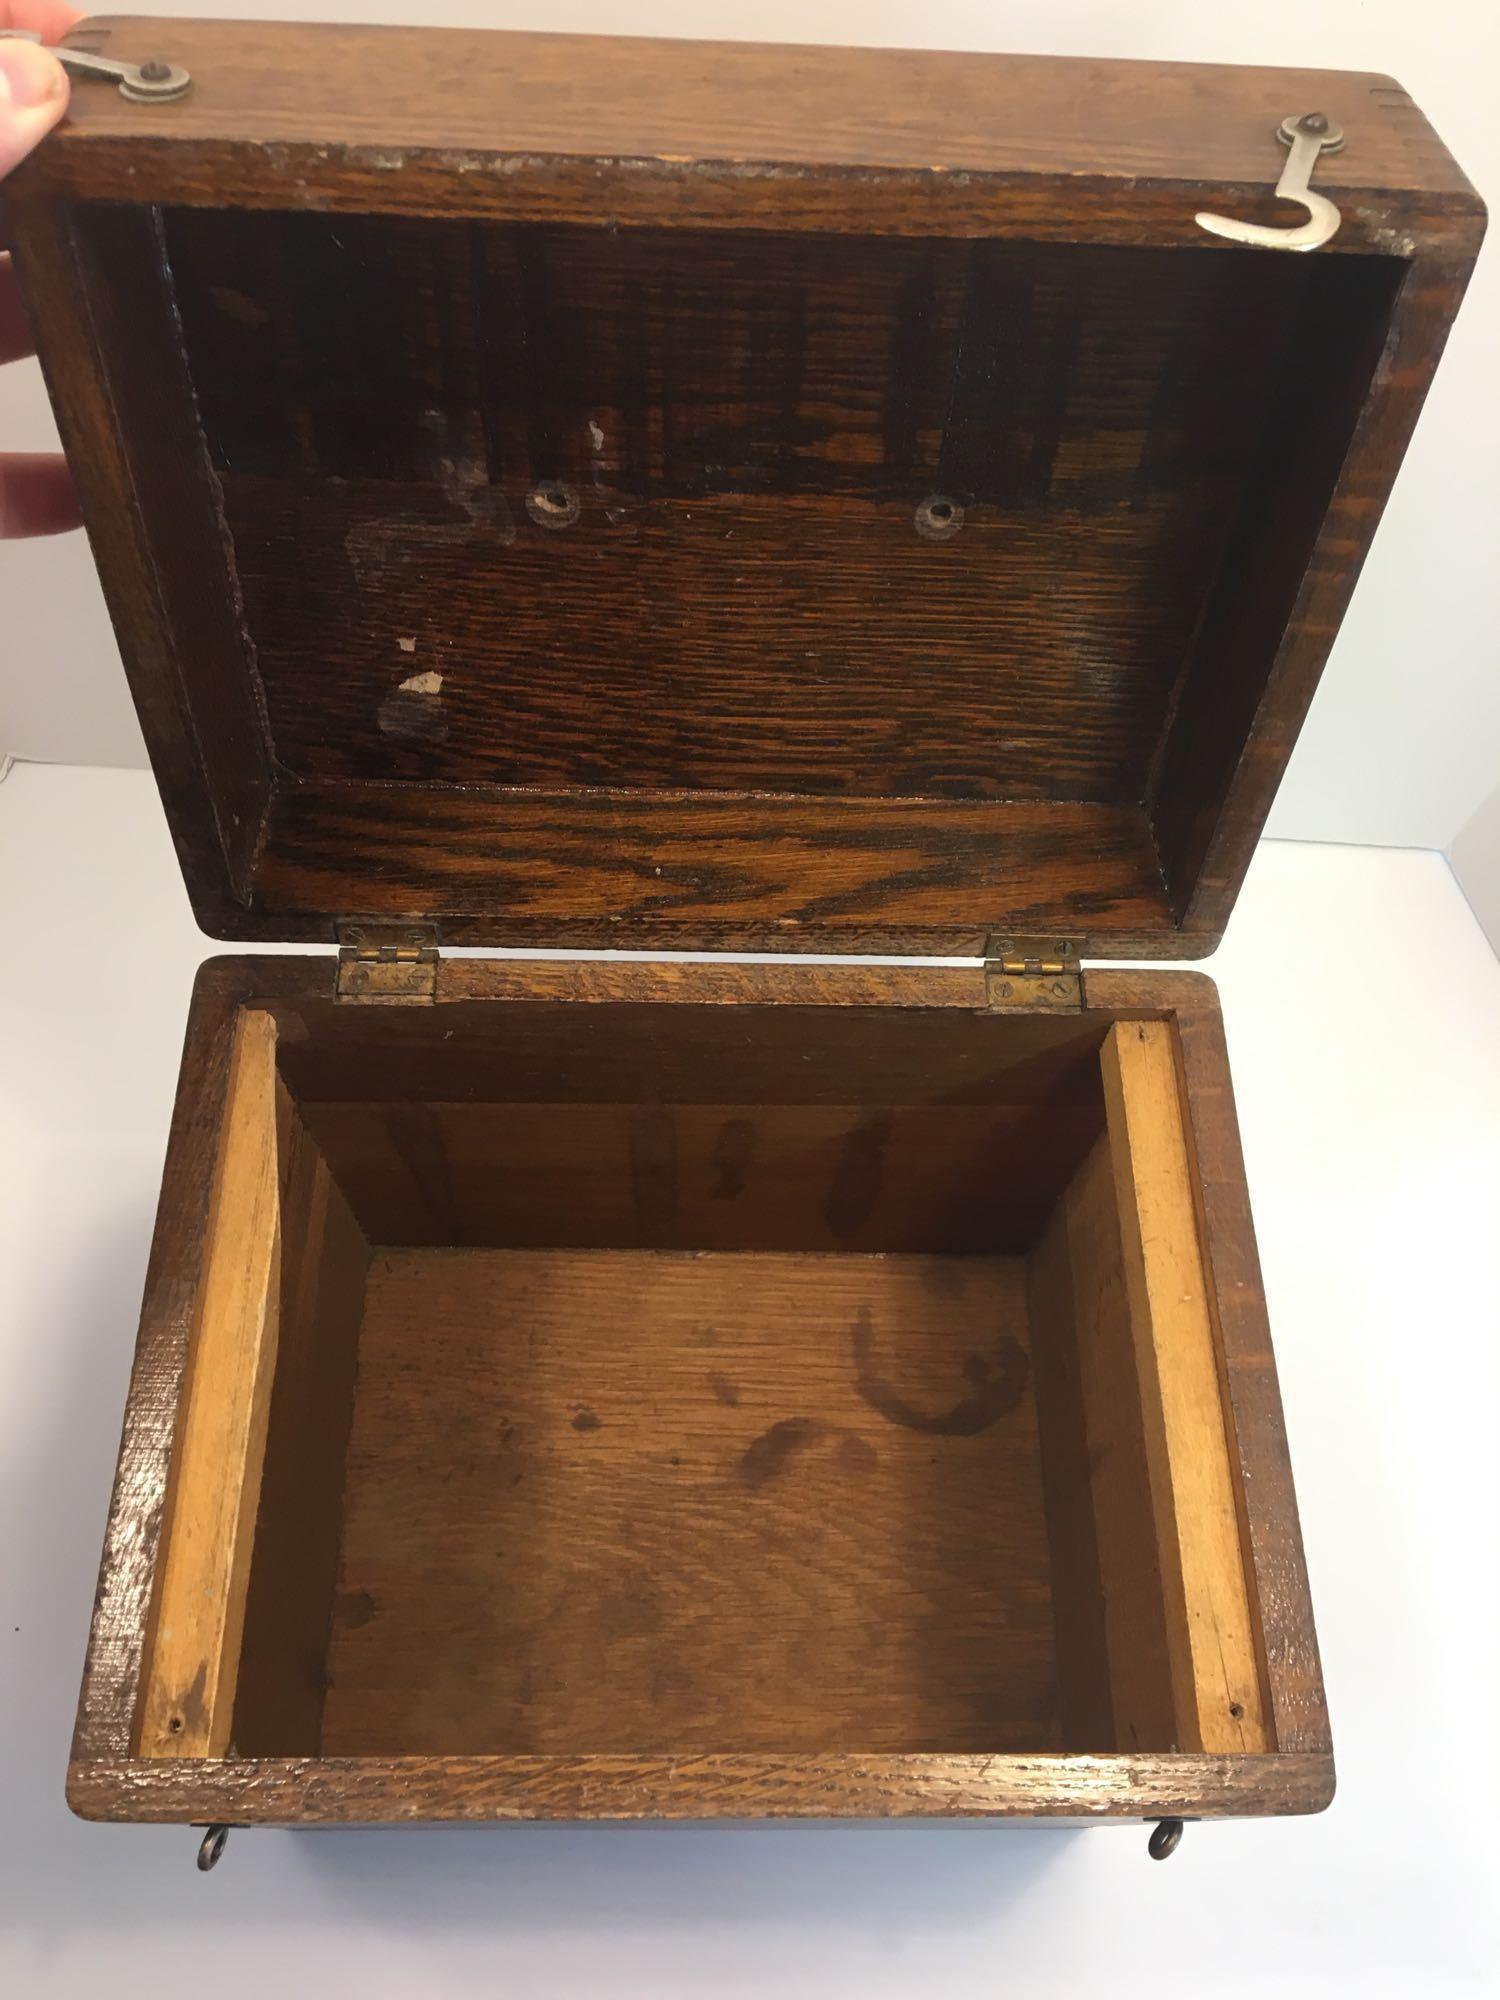 Vintage oak storage box (FRANK S. BETZ CO.)